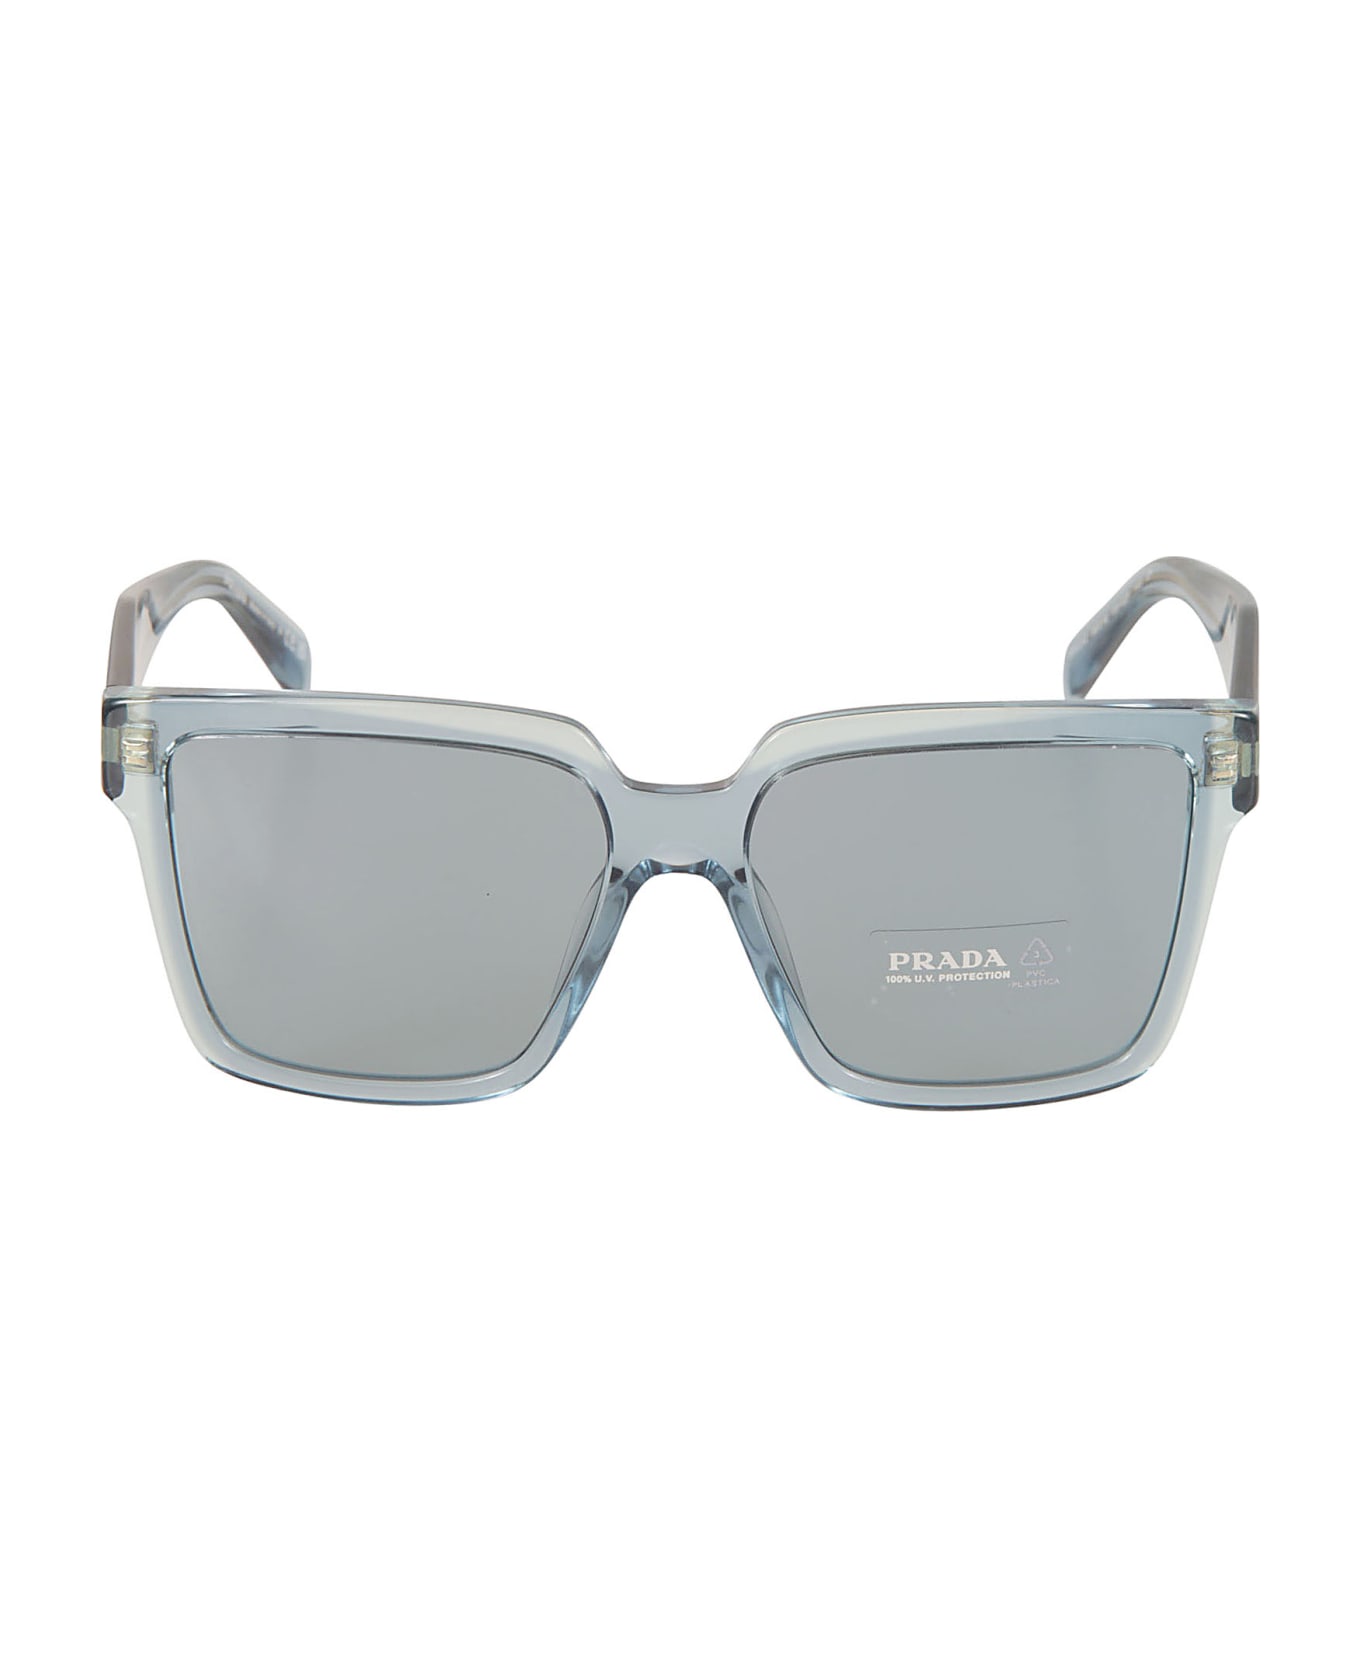 Prada Eyewear Sole Sunglasses - 15I02F